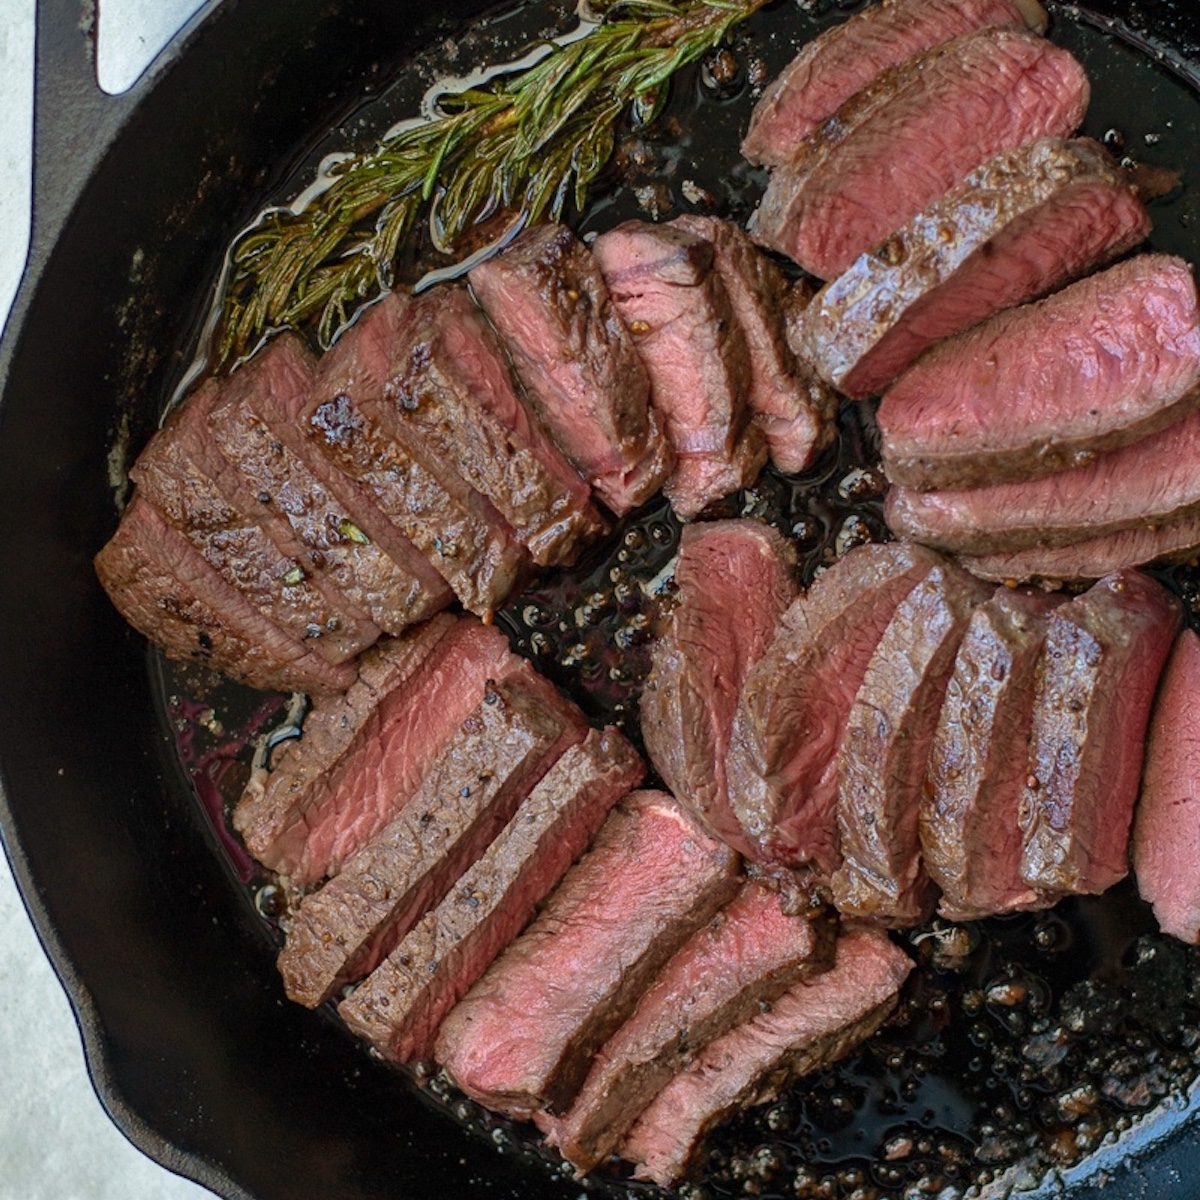 Cast Iron Steak - Kikkoman Home Cooks